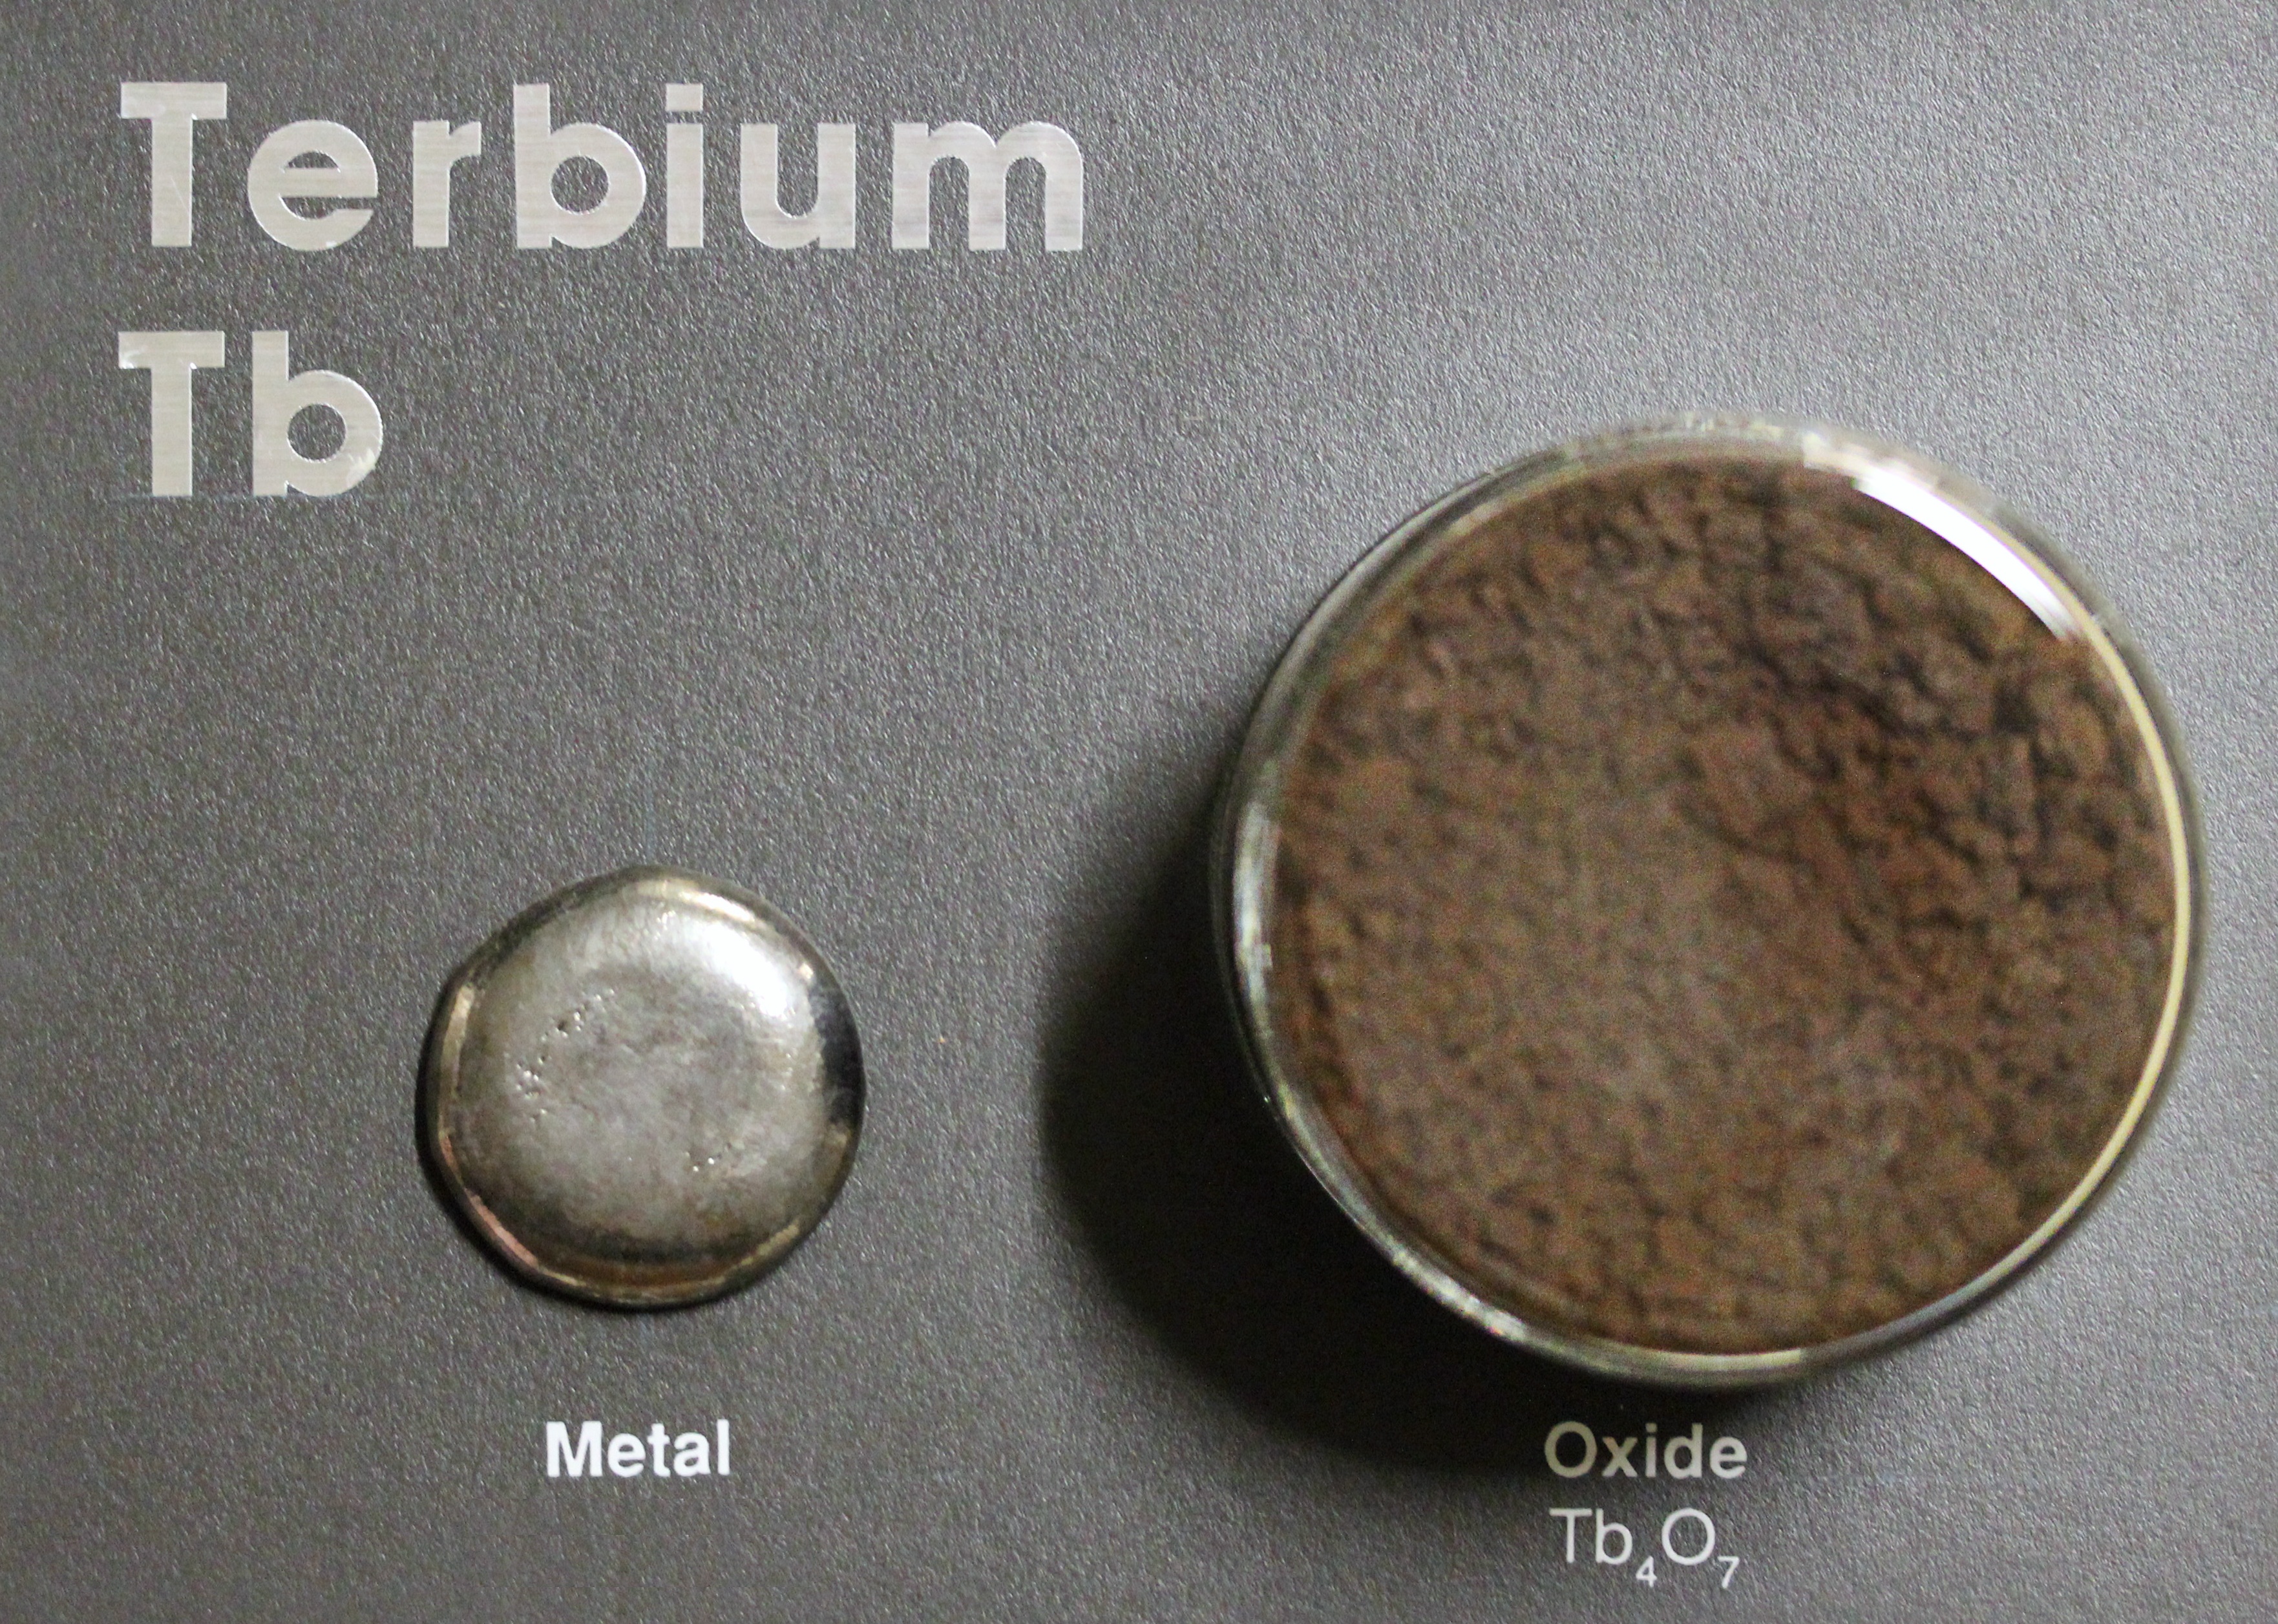 Terbium metal and oxide